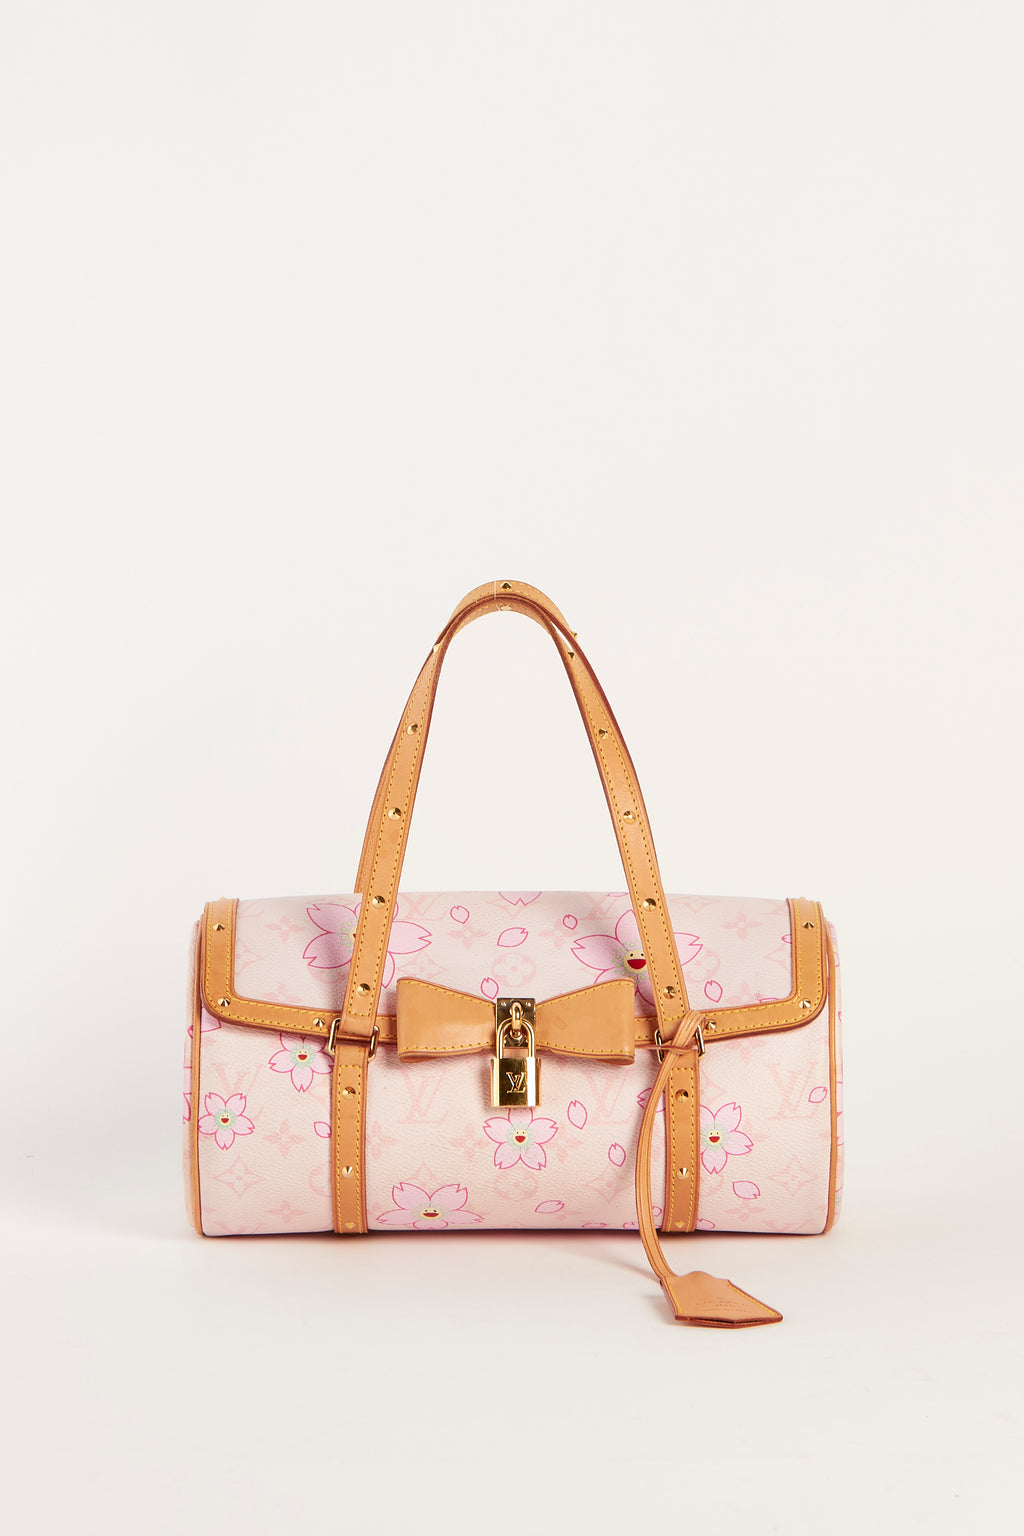 Louis Vuitton x Takashi Murakami Cherry Blossom Monogram Papillon Bag